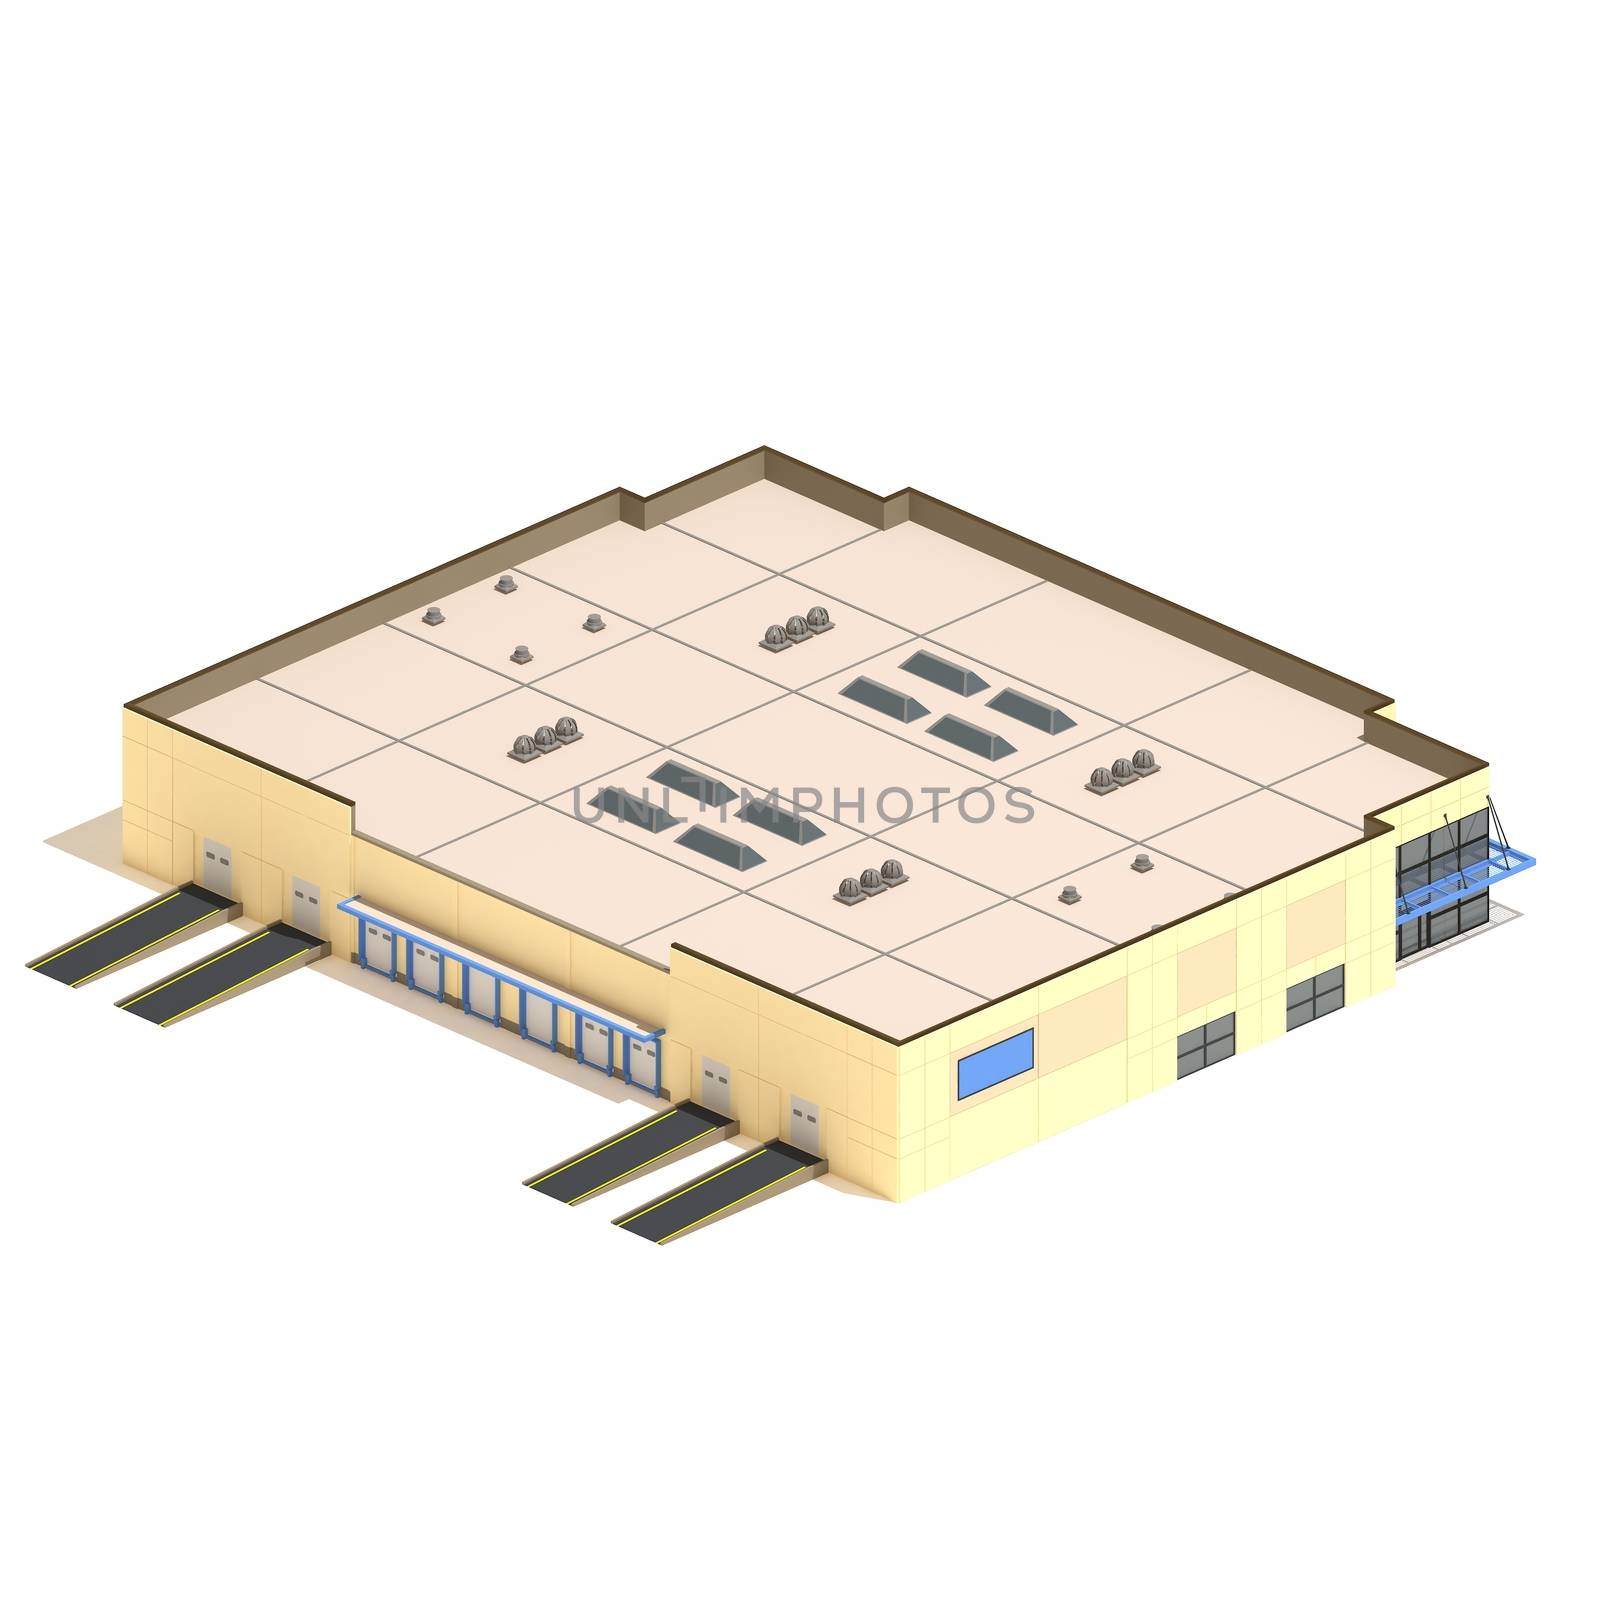 Flat 3d model isometric warehouse building illustration isolated on white background.